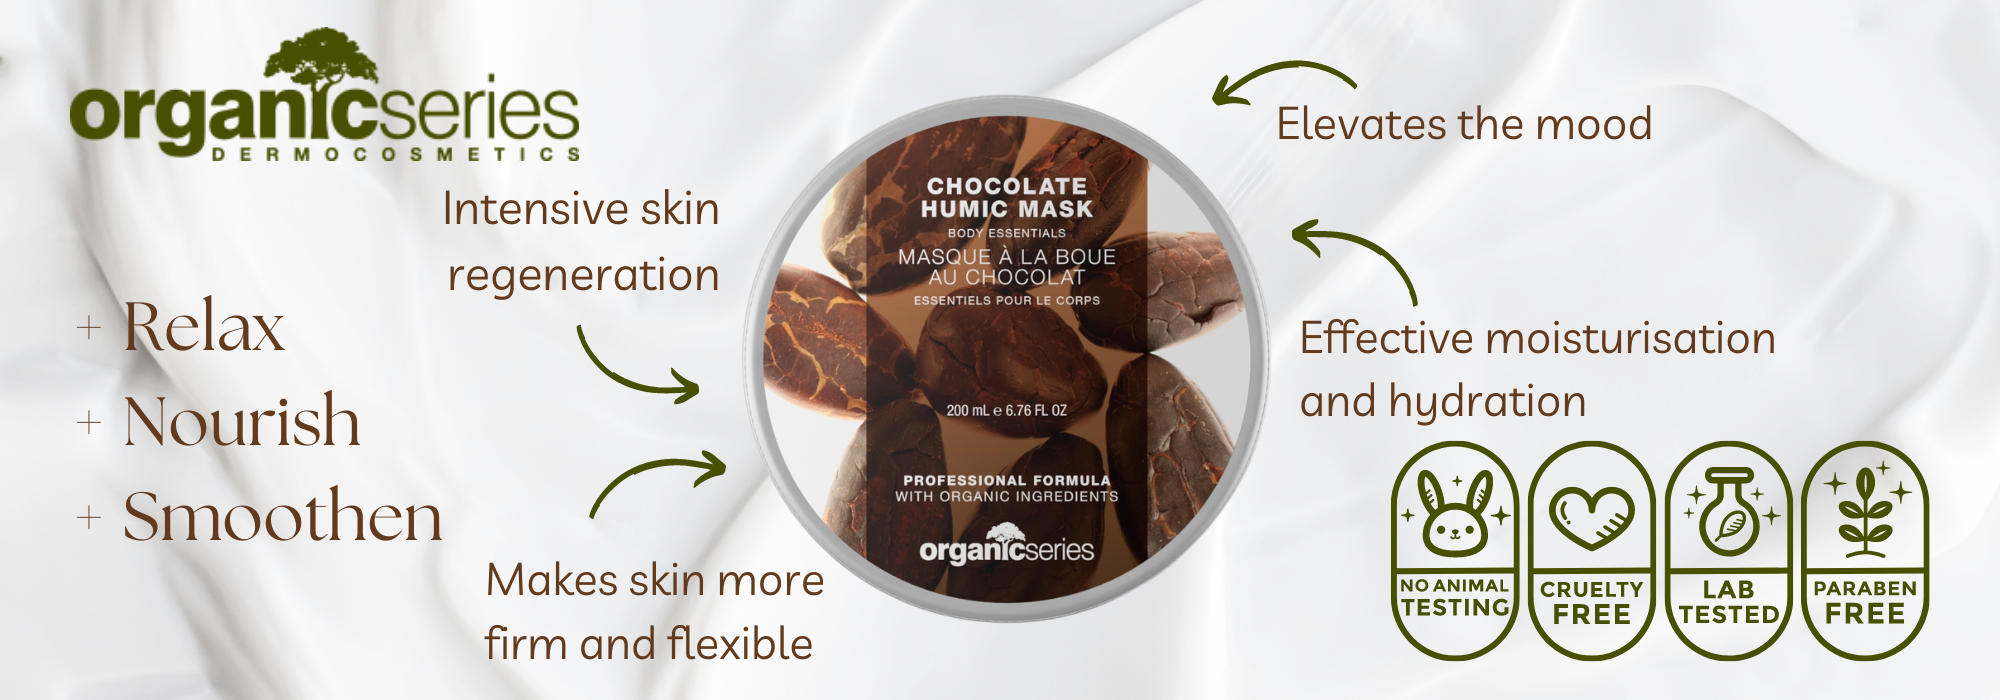 chocolate humic acid mask by organic series